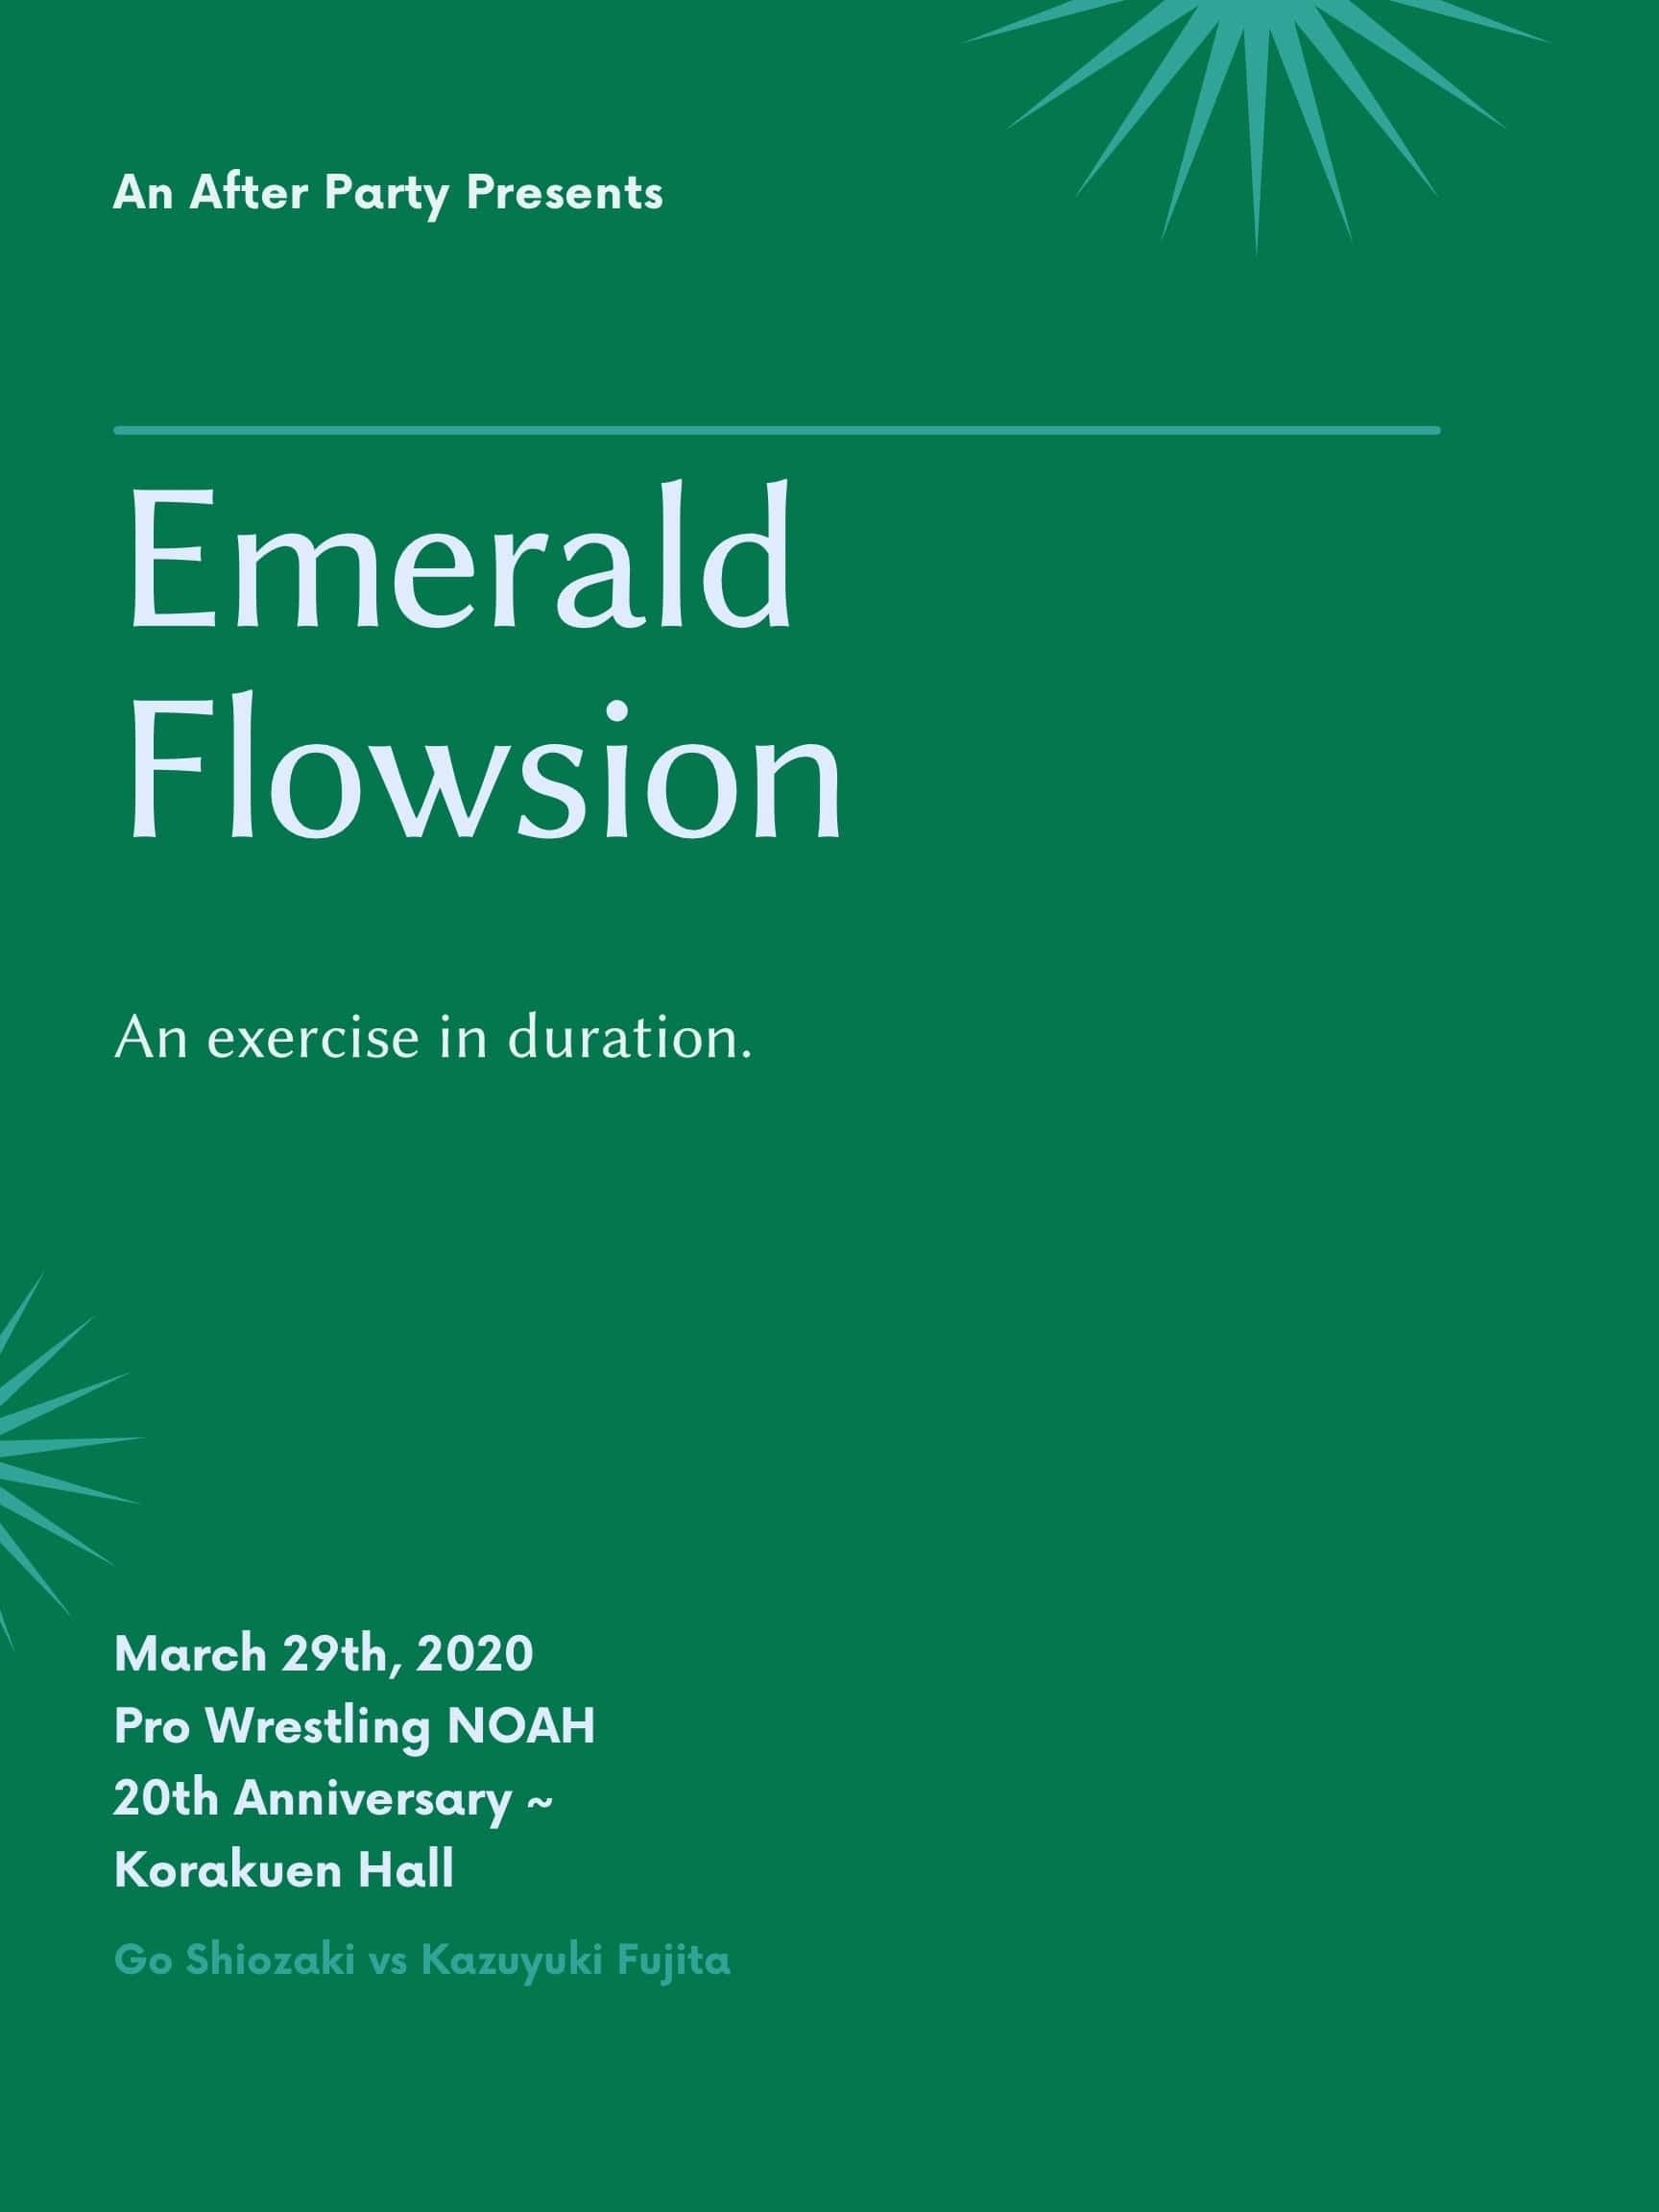 Emerald Flowsion